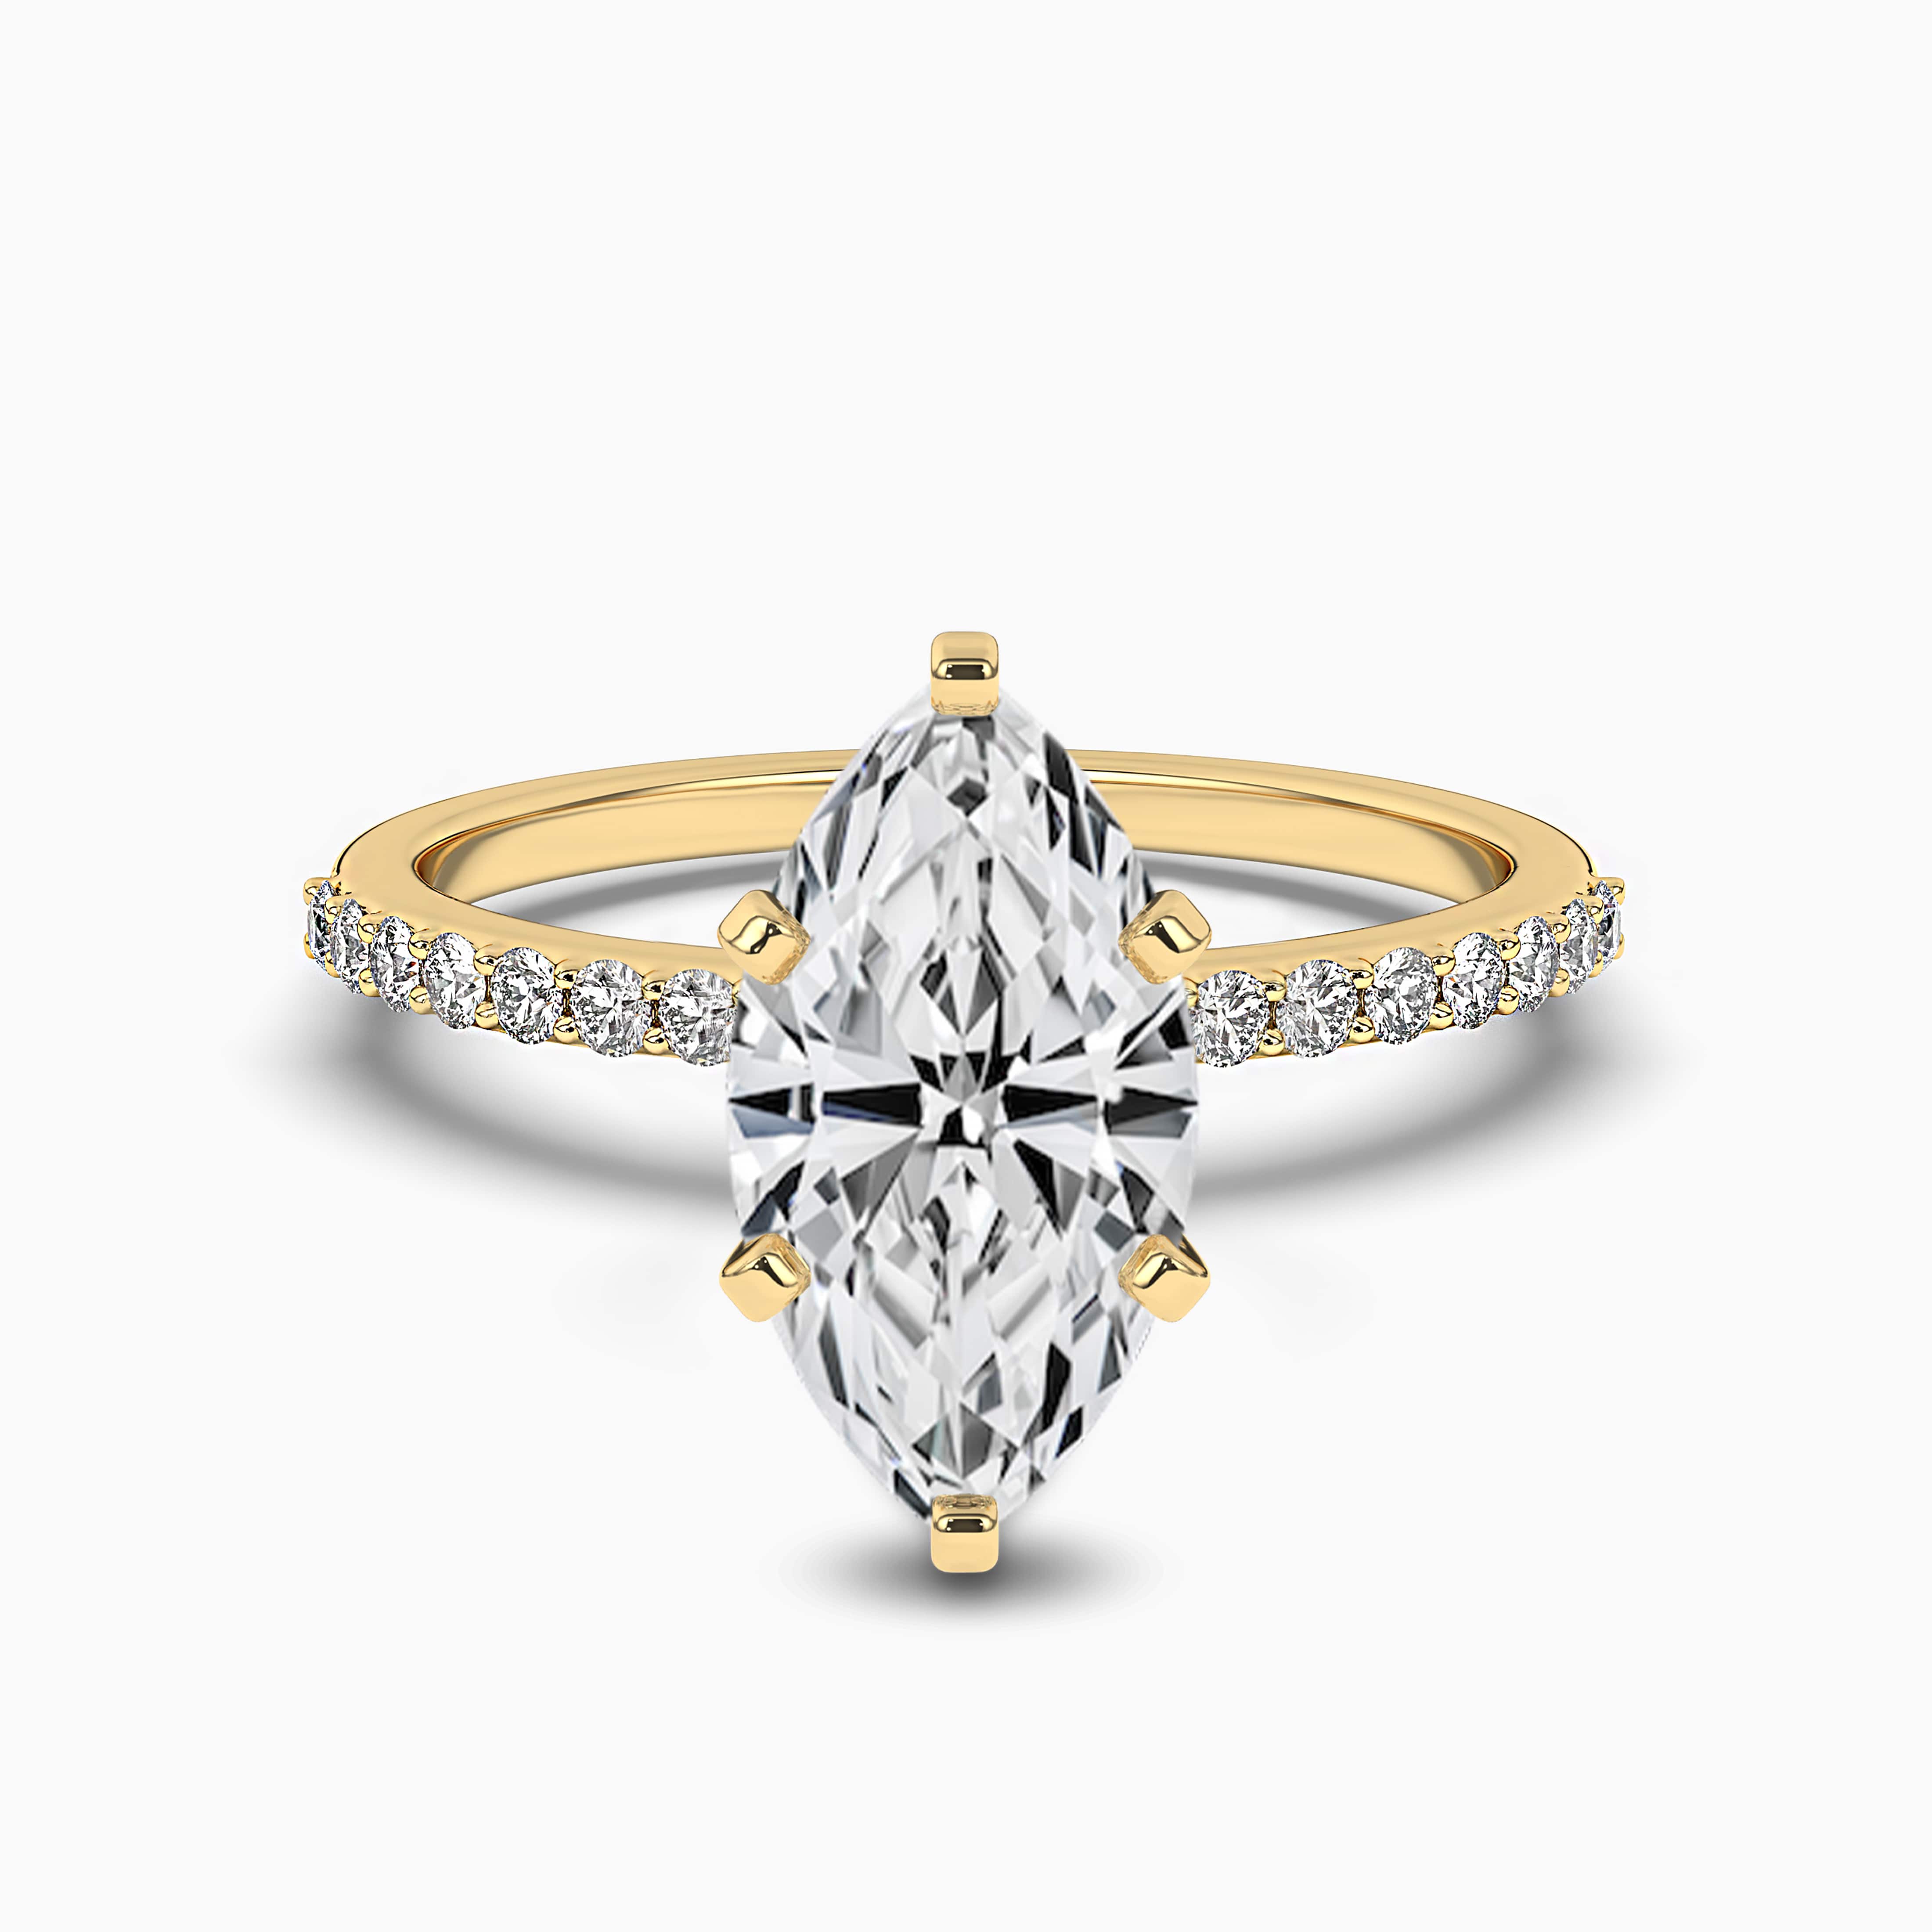 Marquise Diamond Engagement Ring 2 Carat Marquise Shaped White Gold Diamond Ring